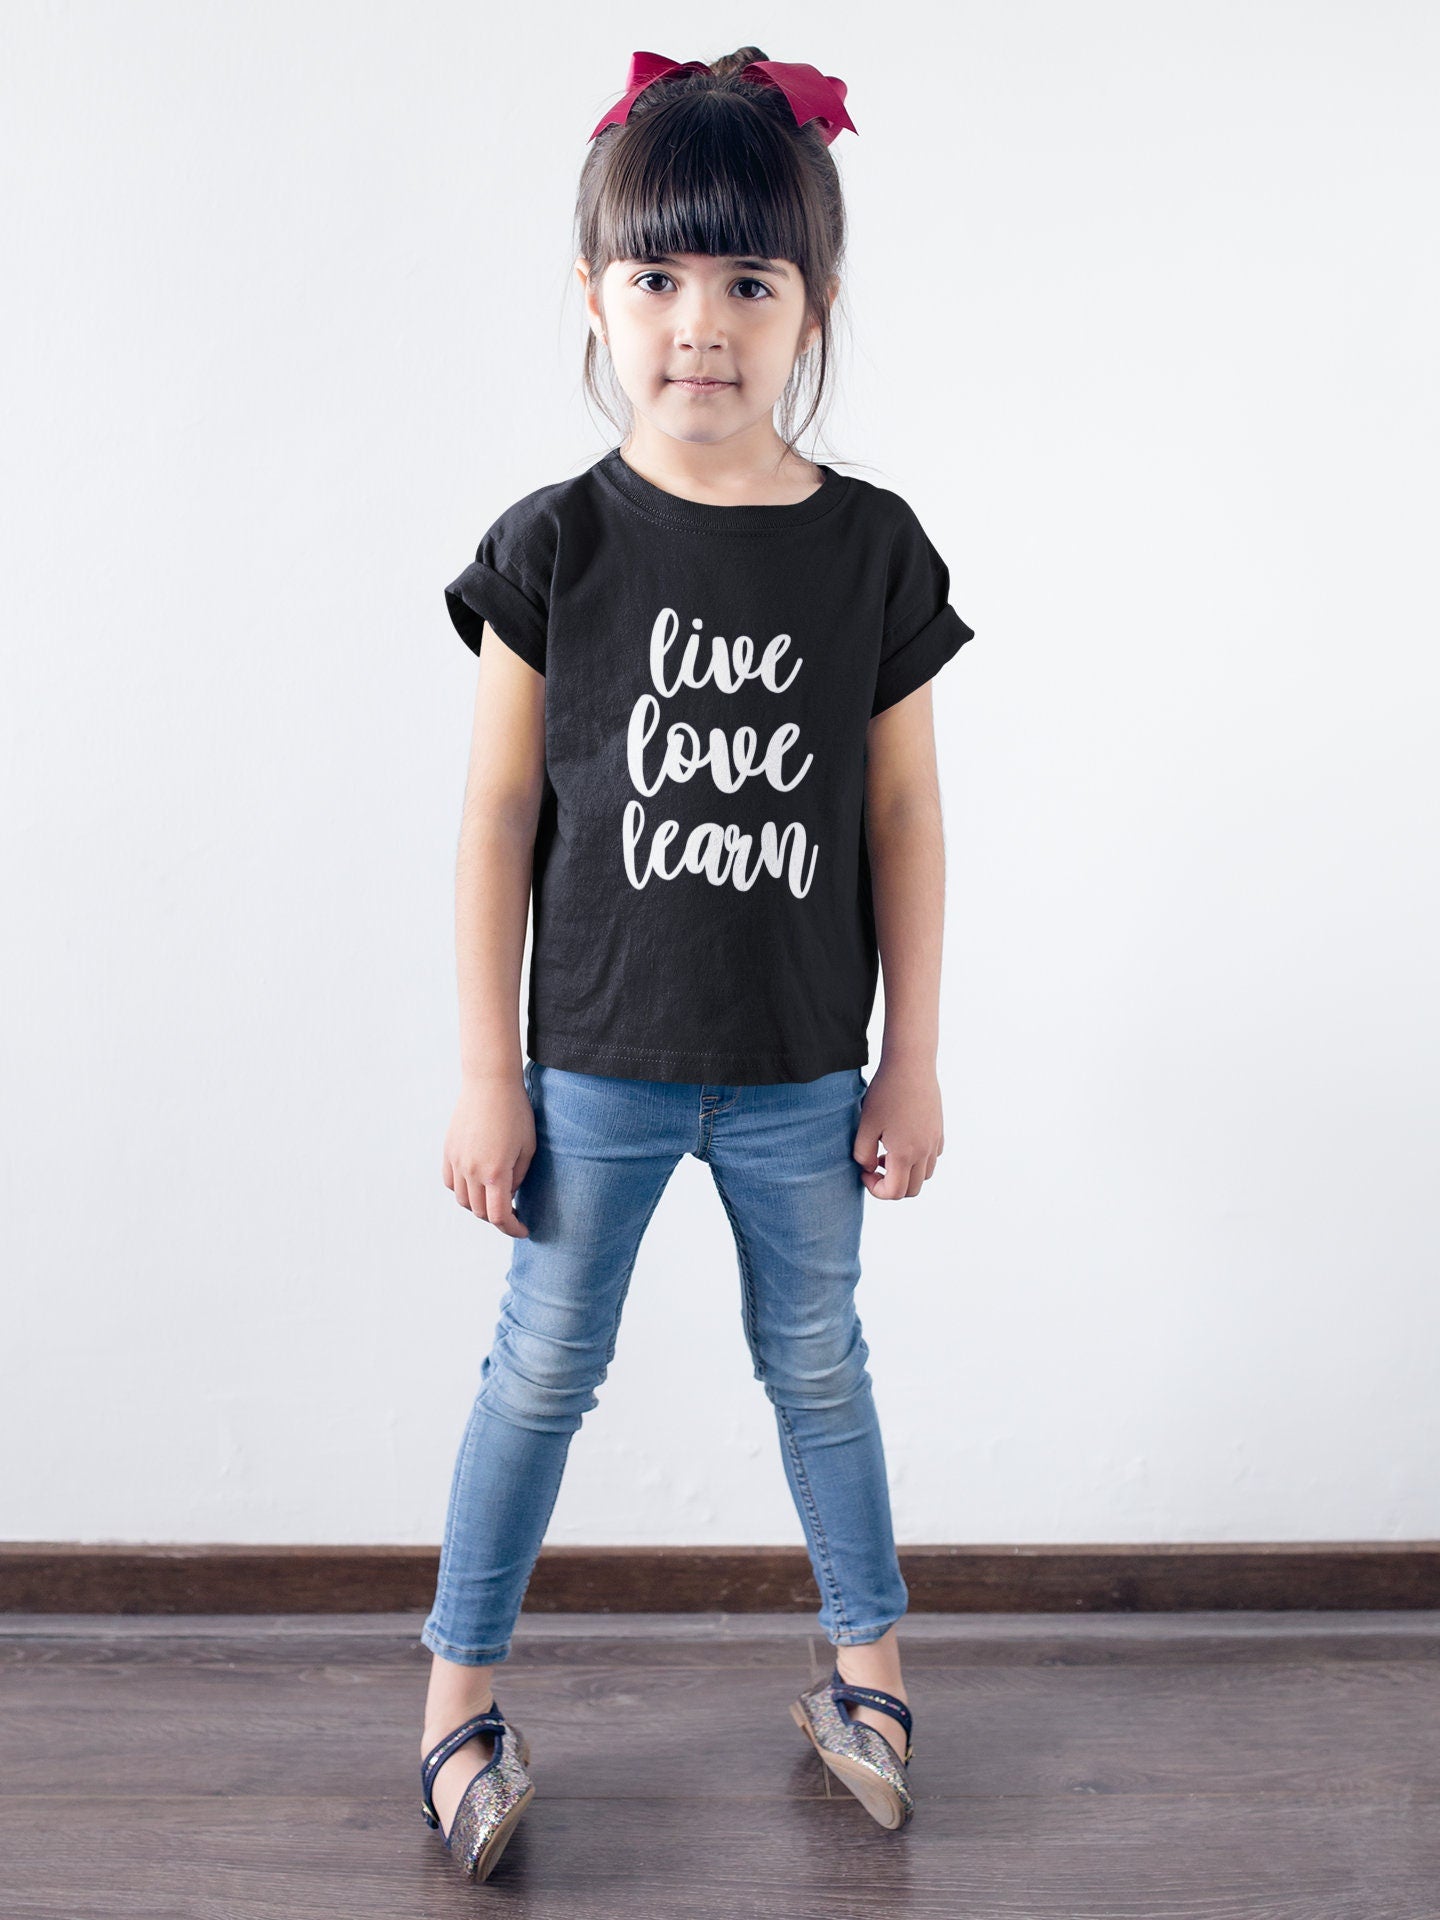 Live love Learn T-Shirt/Sweatshirt, Kids Cute T-Shirt, Back To School Shirt, Positive T-Shirt/Sweatshirt, Slogan T-shirt